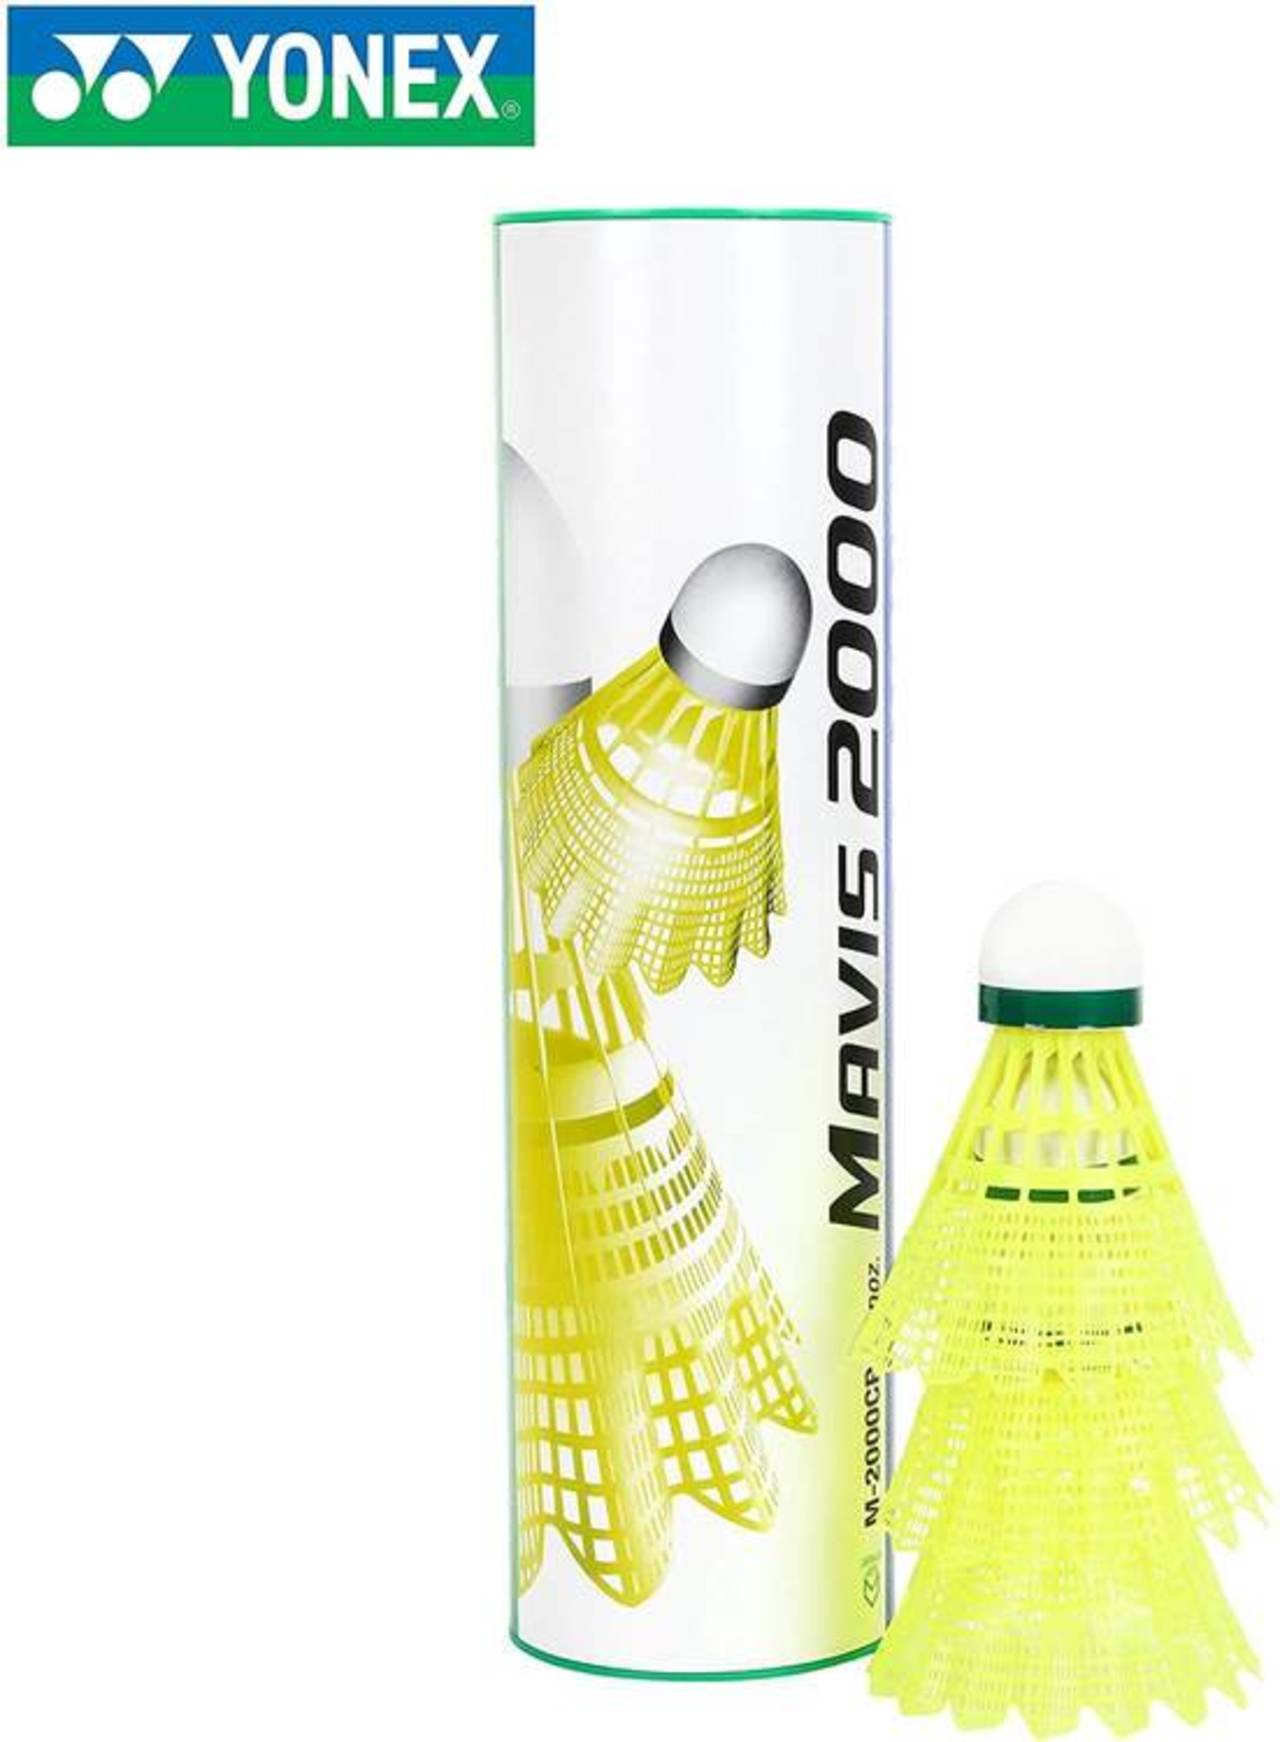 Yonex MAVIS 2000 Badminton Shuttlecock Racket Racquet Red Cap White 100% Genuine 